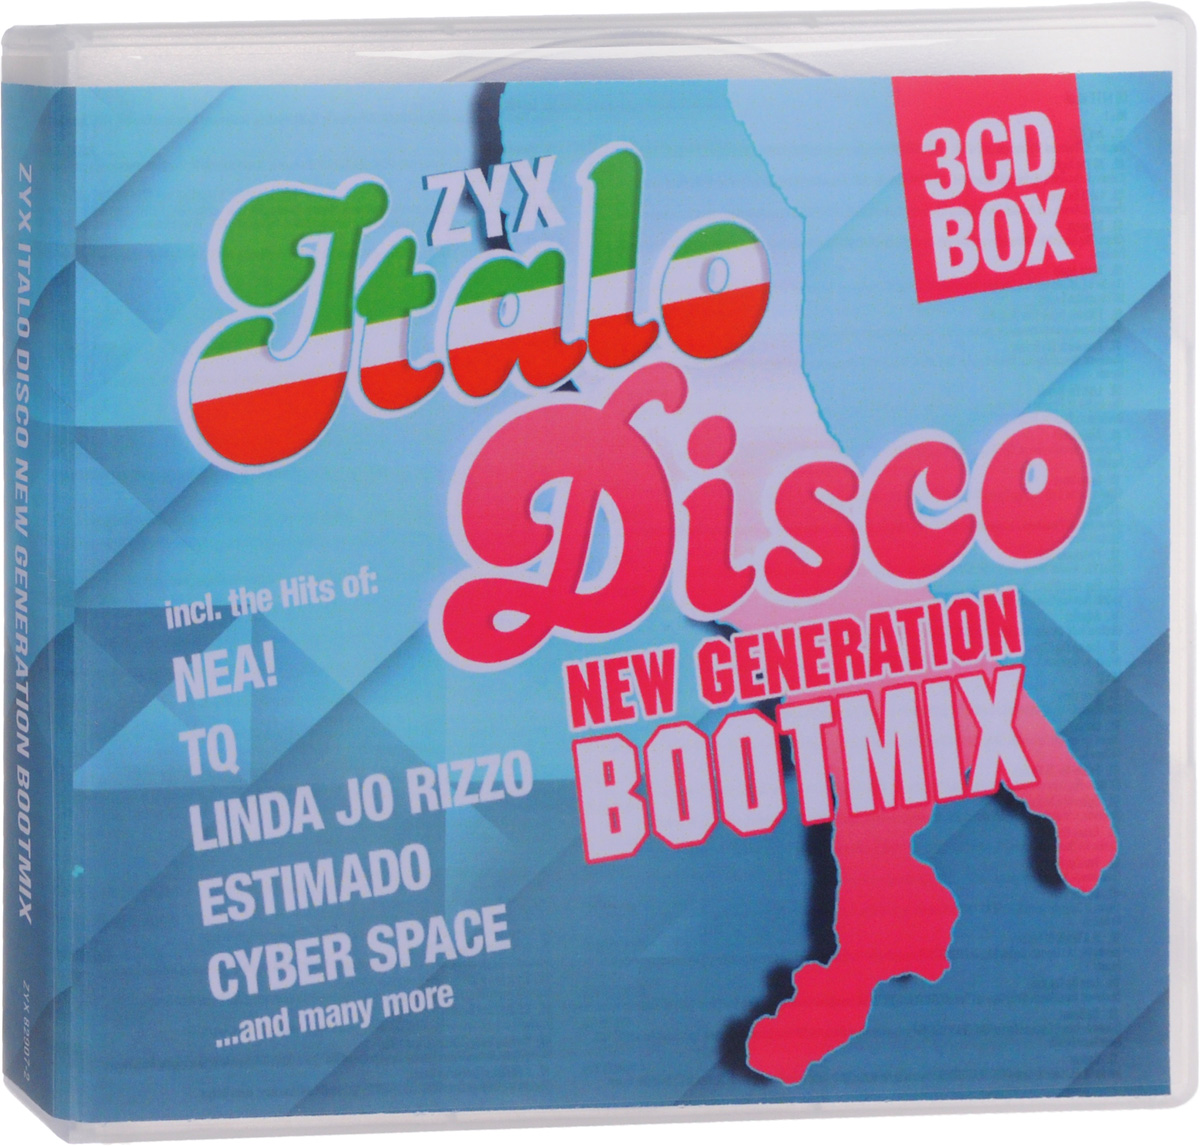 Zyx italo disco new. Italo Disco New Generation. Blue boy Italo Disco биография.